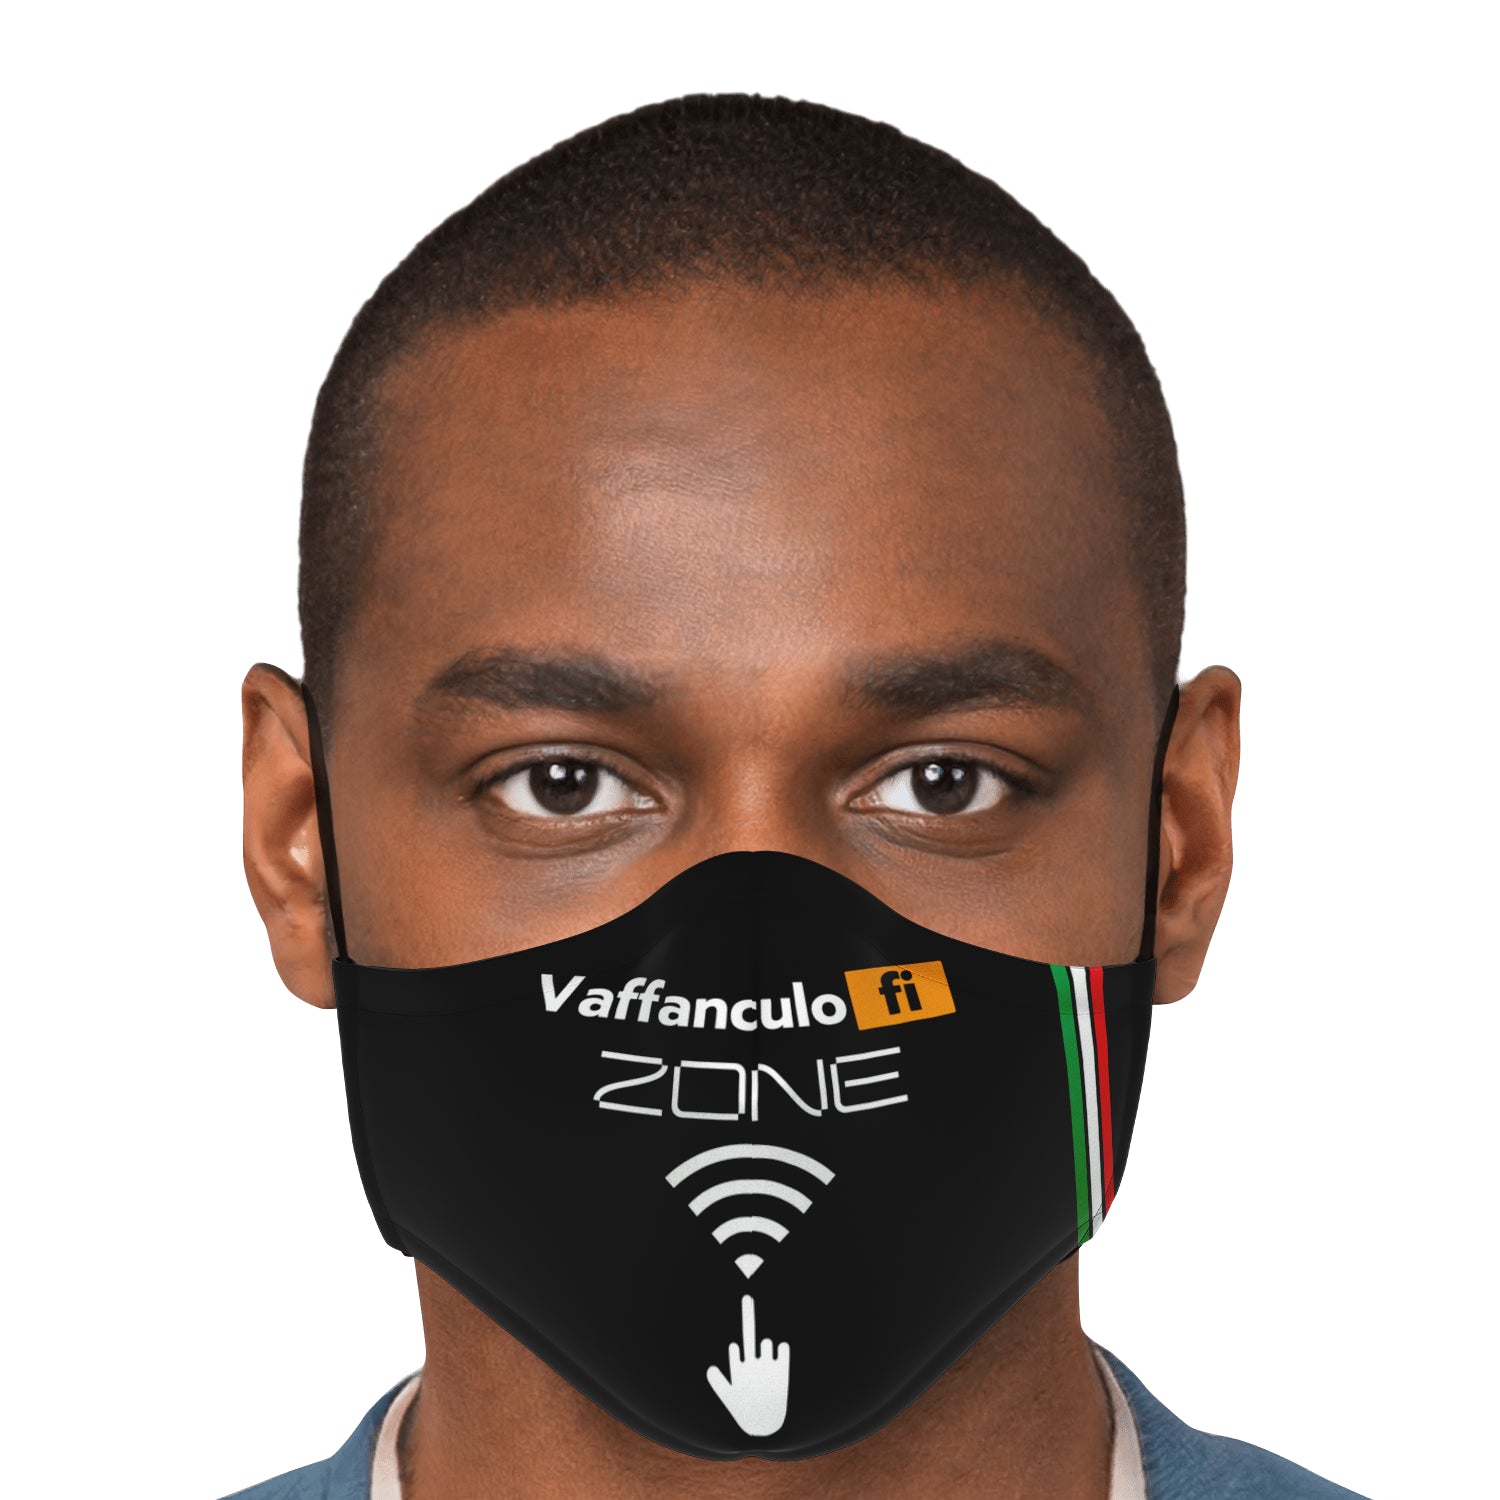 Vaffanculo-Fi Zone Face Mask + 2 PM 2.5 Filters